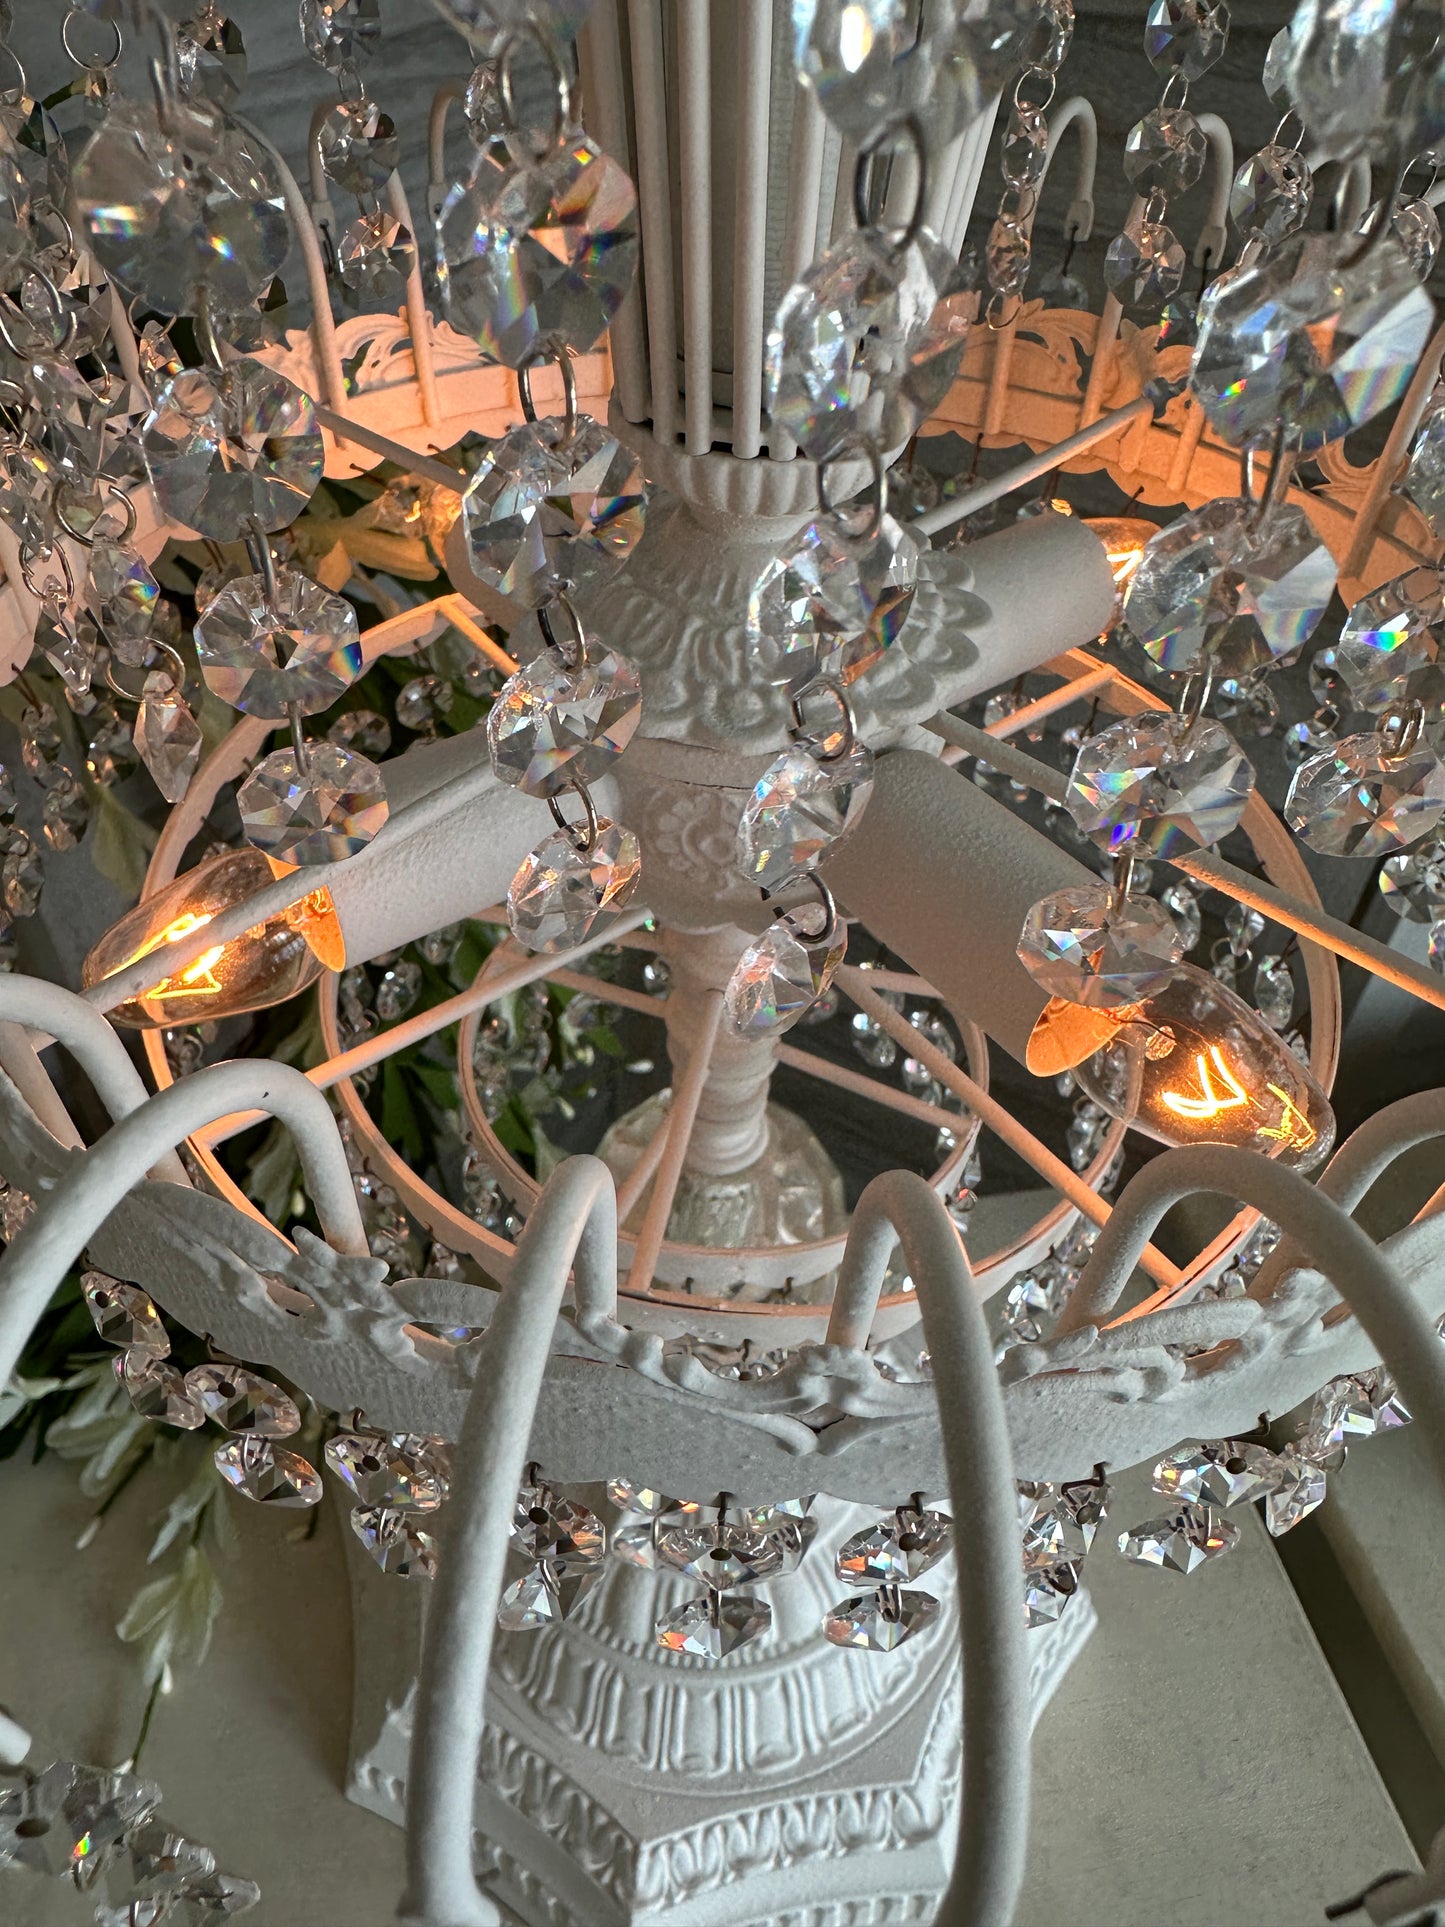 Hollywood Regency Crystal Prism Tablelamp(s)